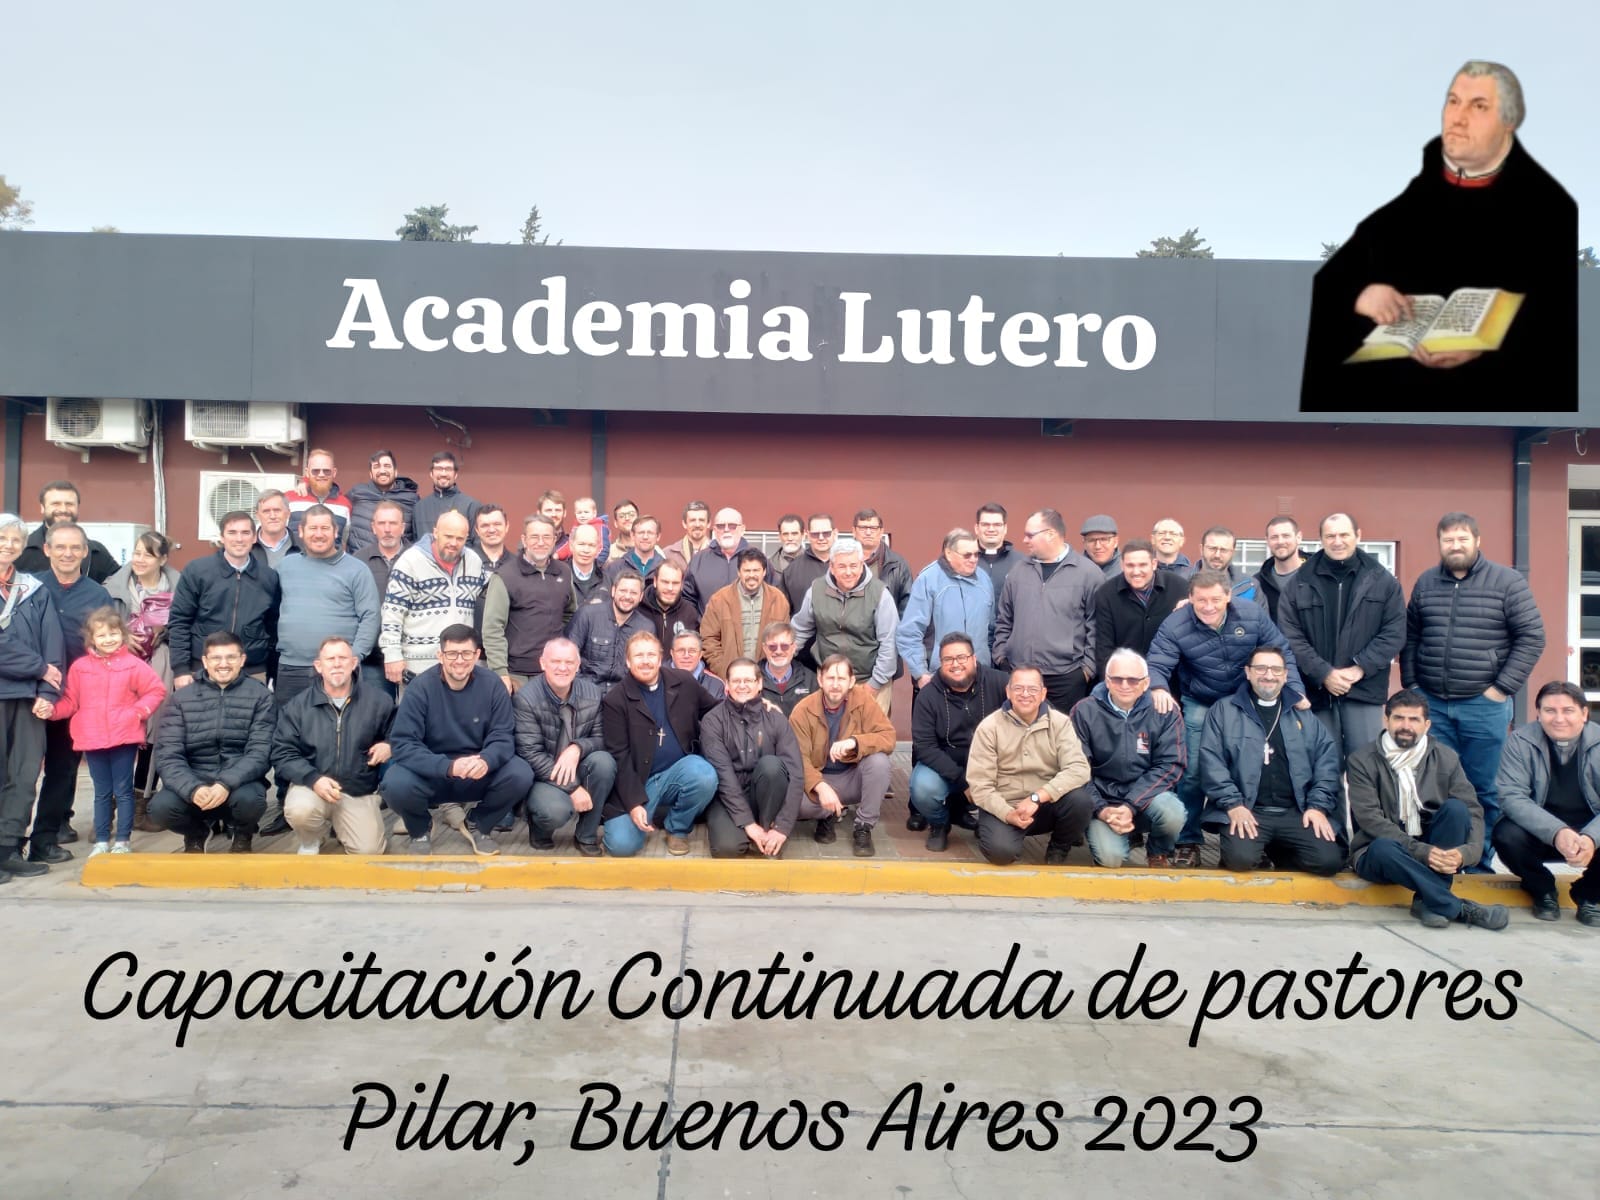 Academia de Lutero, Buenos Aires, Argentina. 2023